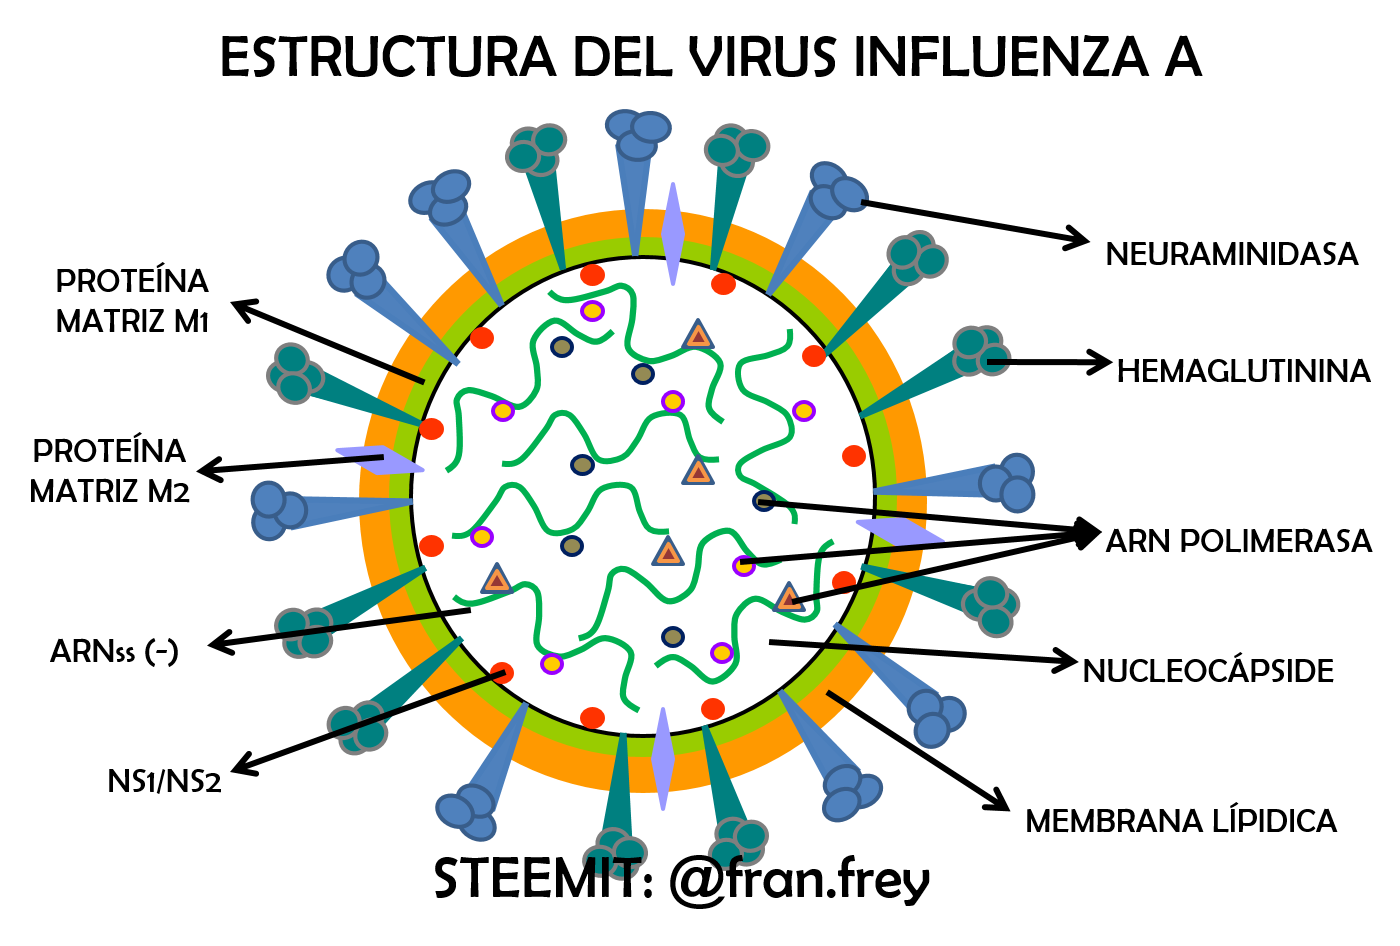 Структура вируса гриппа микробиология. Изображение вируса гриппа. Схематическая структура вируса гриппа. Вирус influenza.